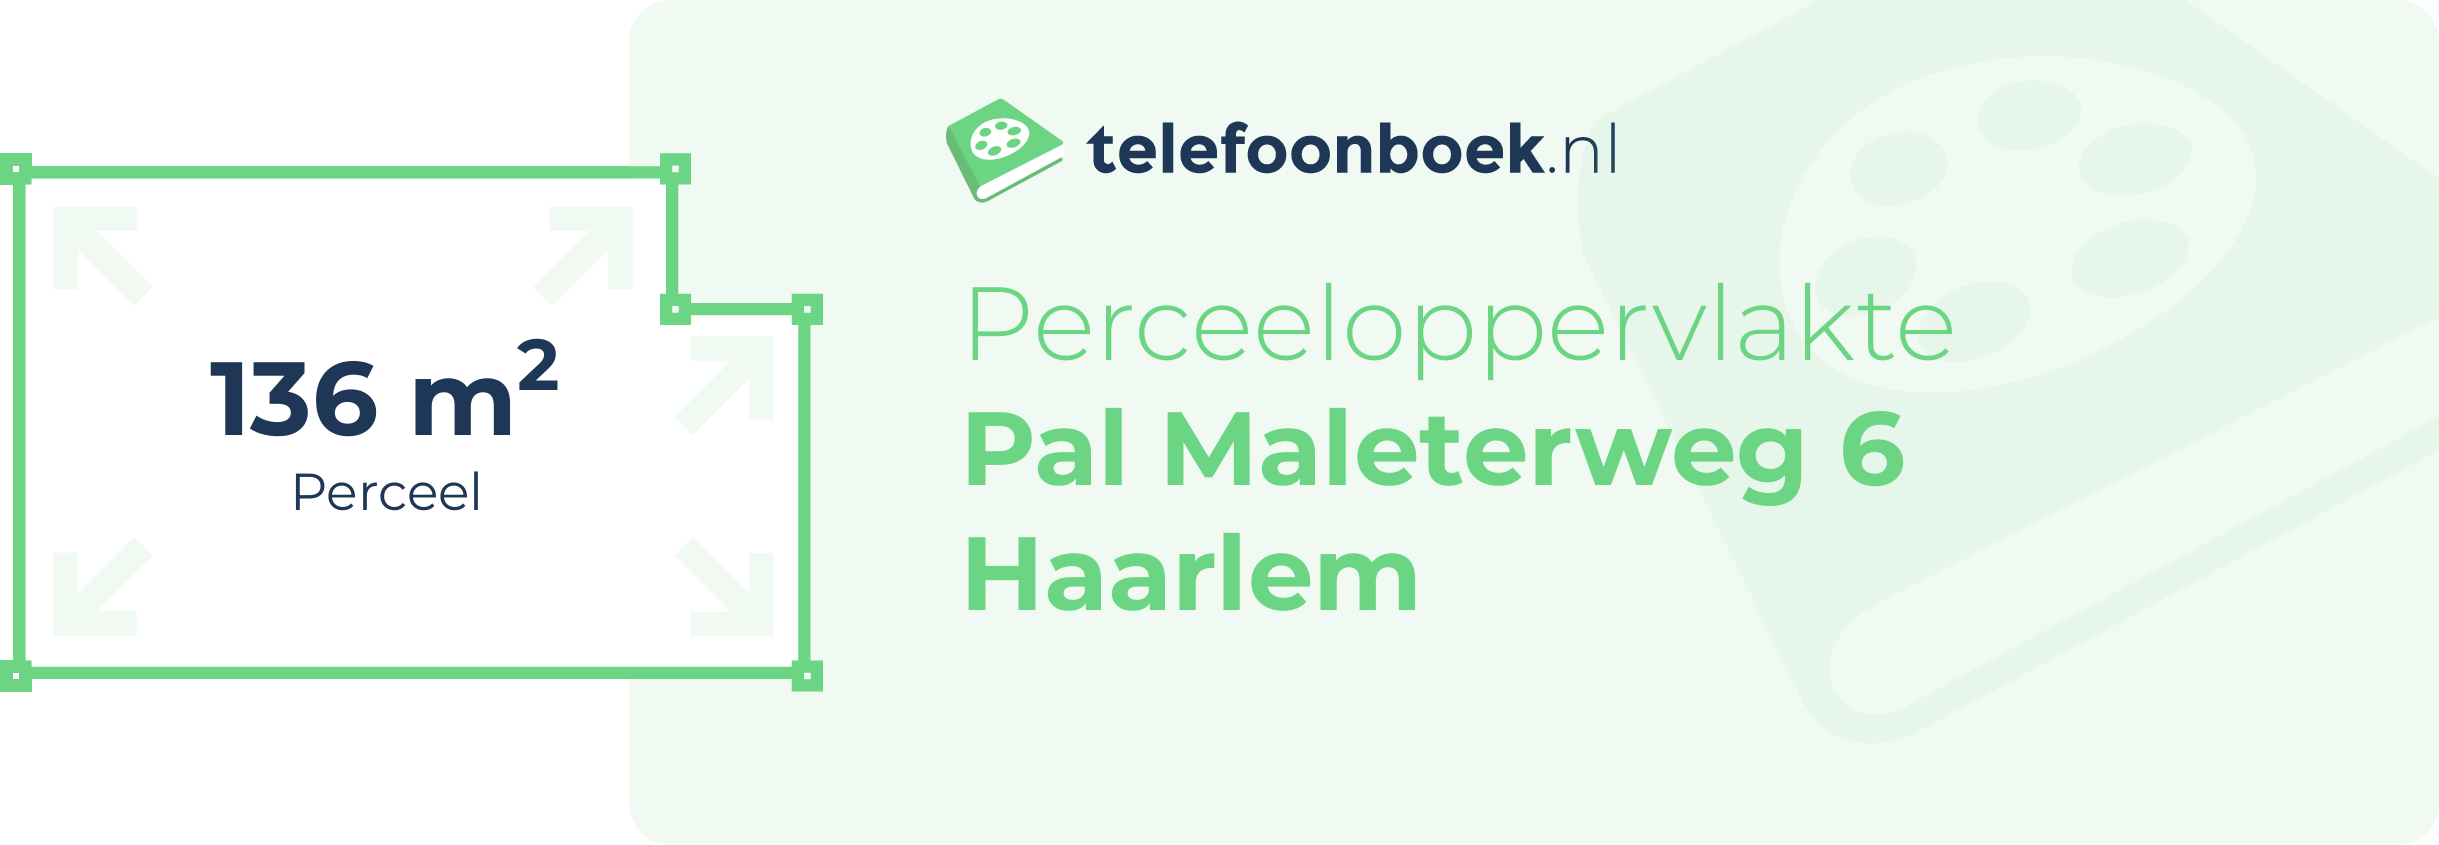 Perceeloppervlakte Pal Maleterweg 6 Haarlem